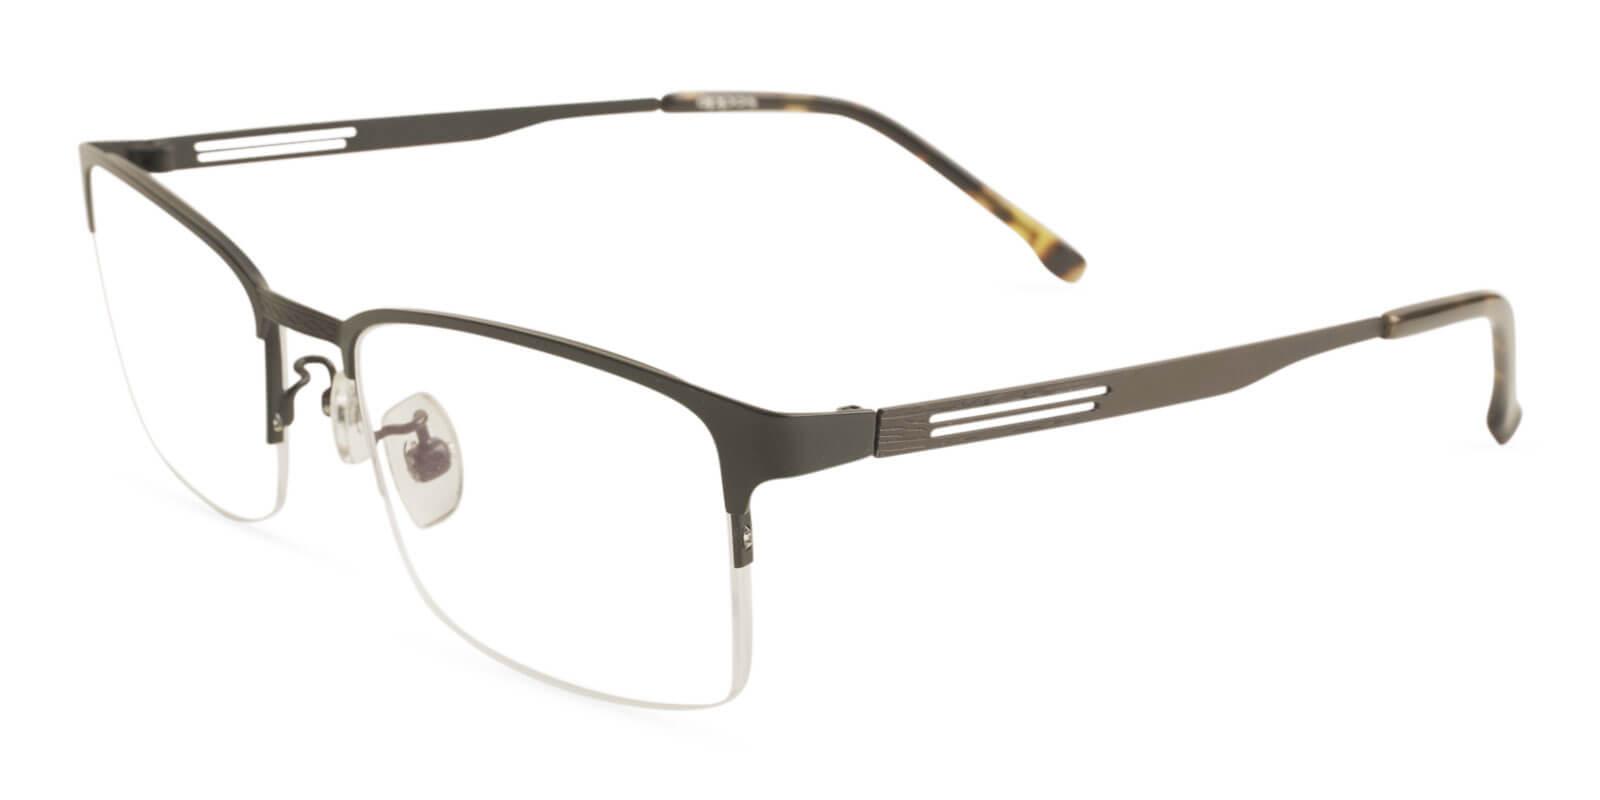 Gabriel Tortoise Metal Eyeglasses , NosePads Frames from ABBE Glasses